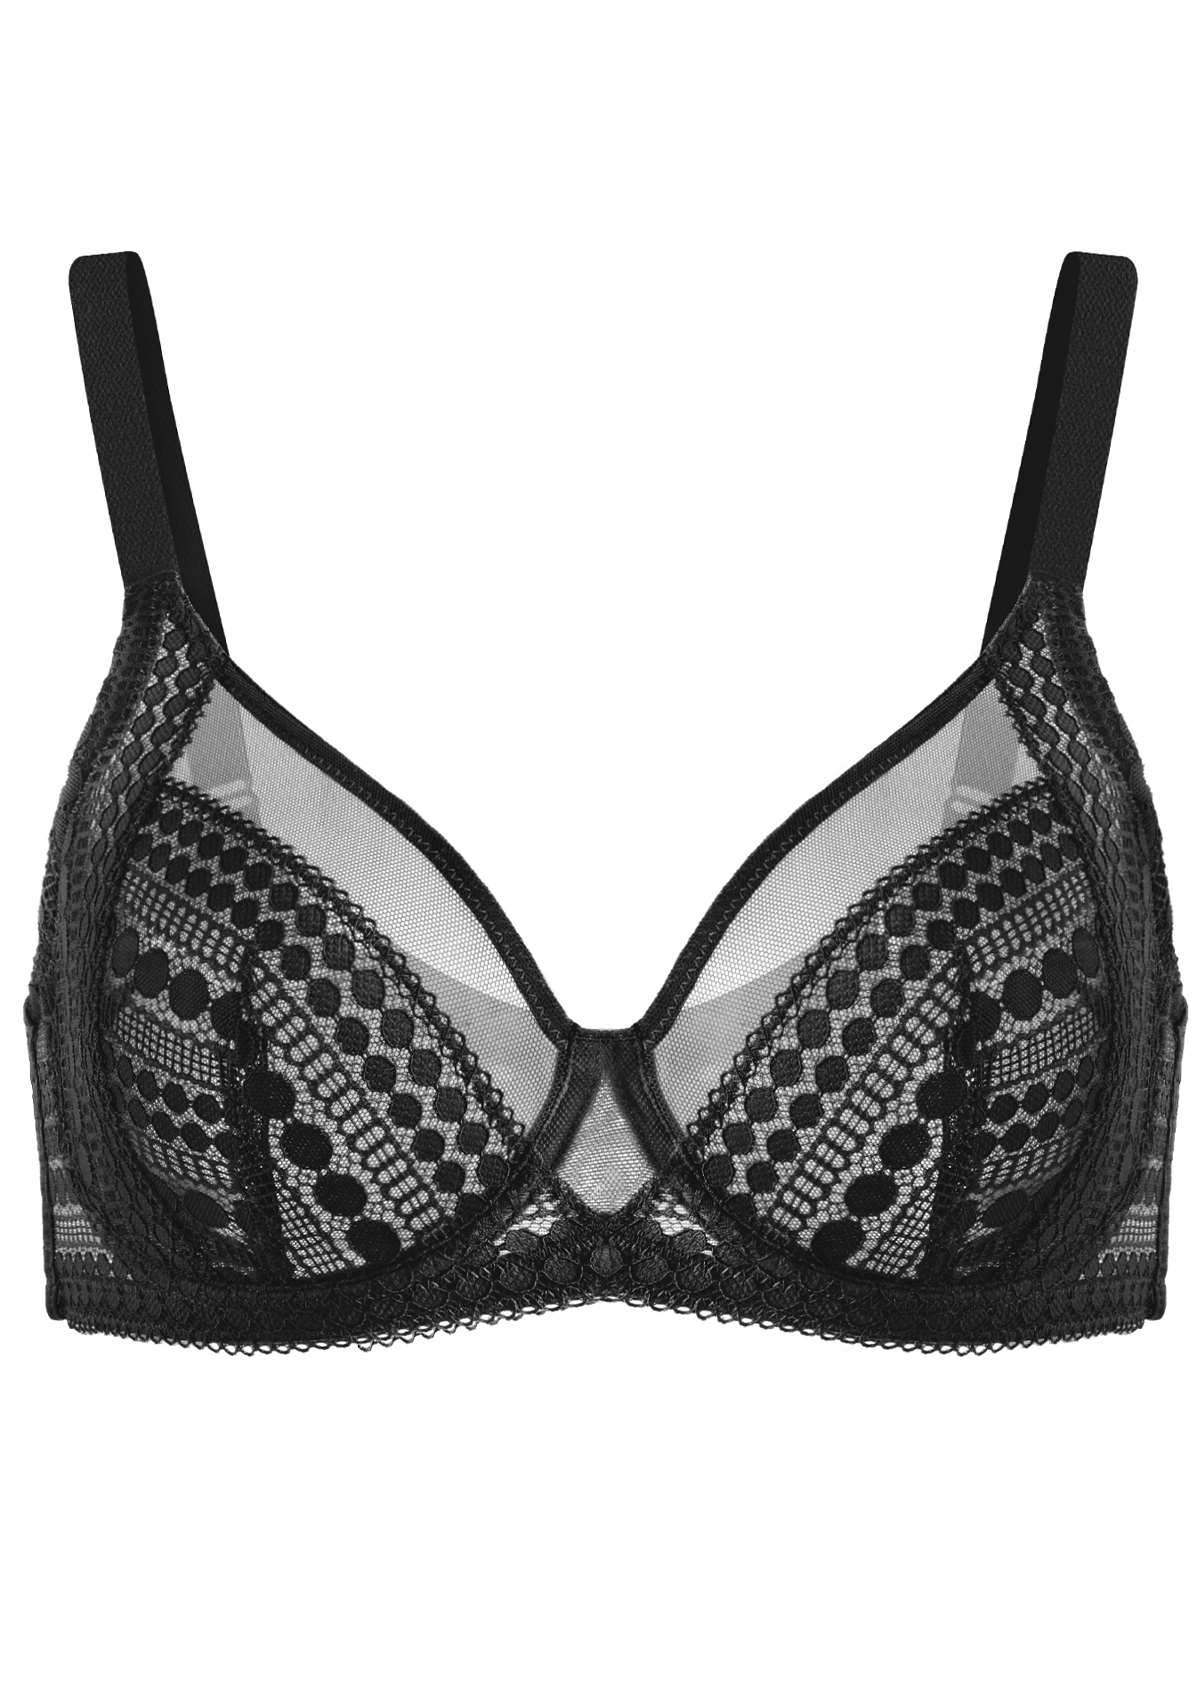 HSIA Heroine Matching Bra And Panties: Unlined Lace Unpadded Bra - Black / 42 / C